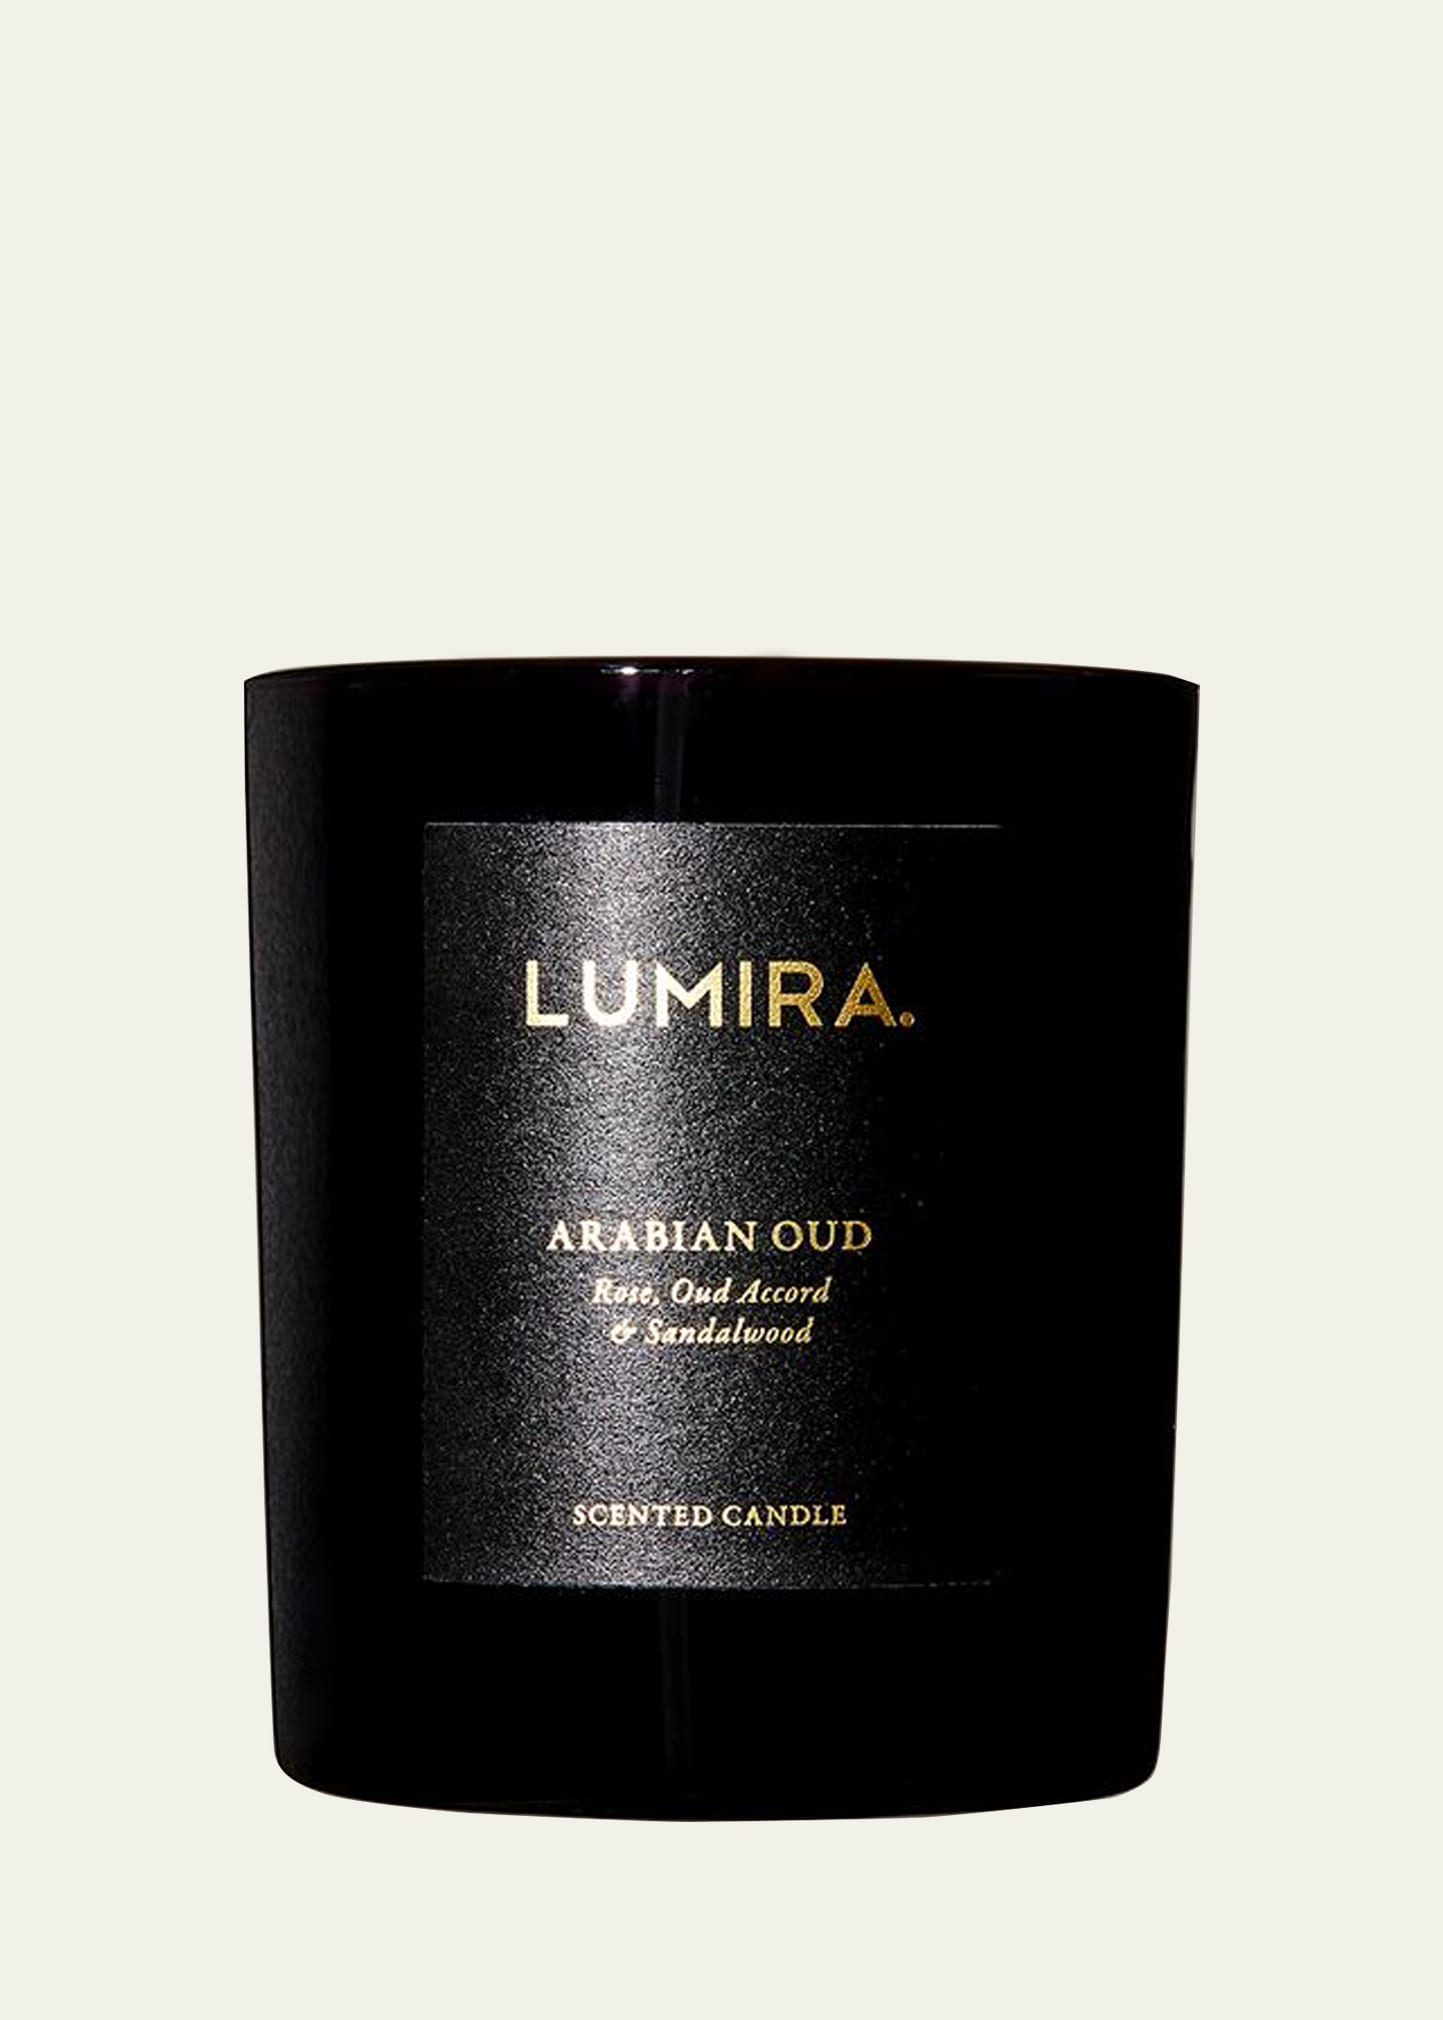 Lumira Arabian Oud Scented Candle, 300g In Black